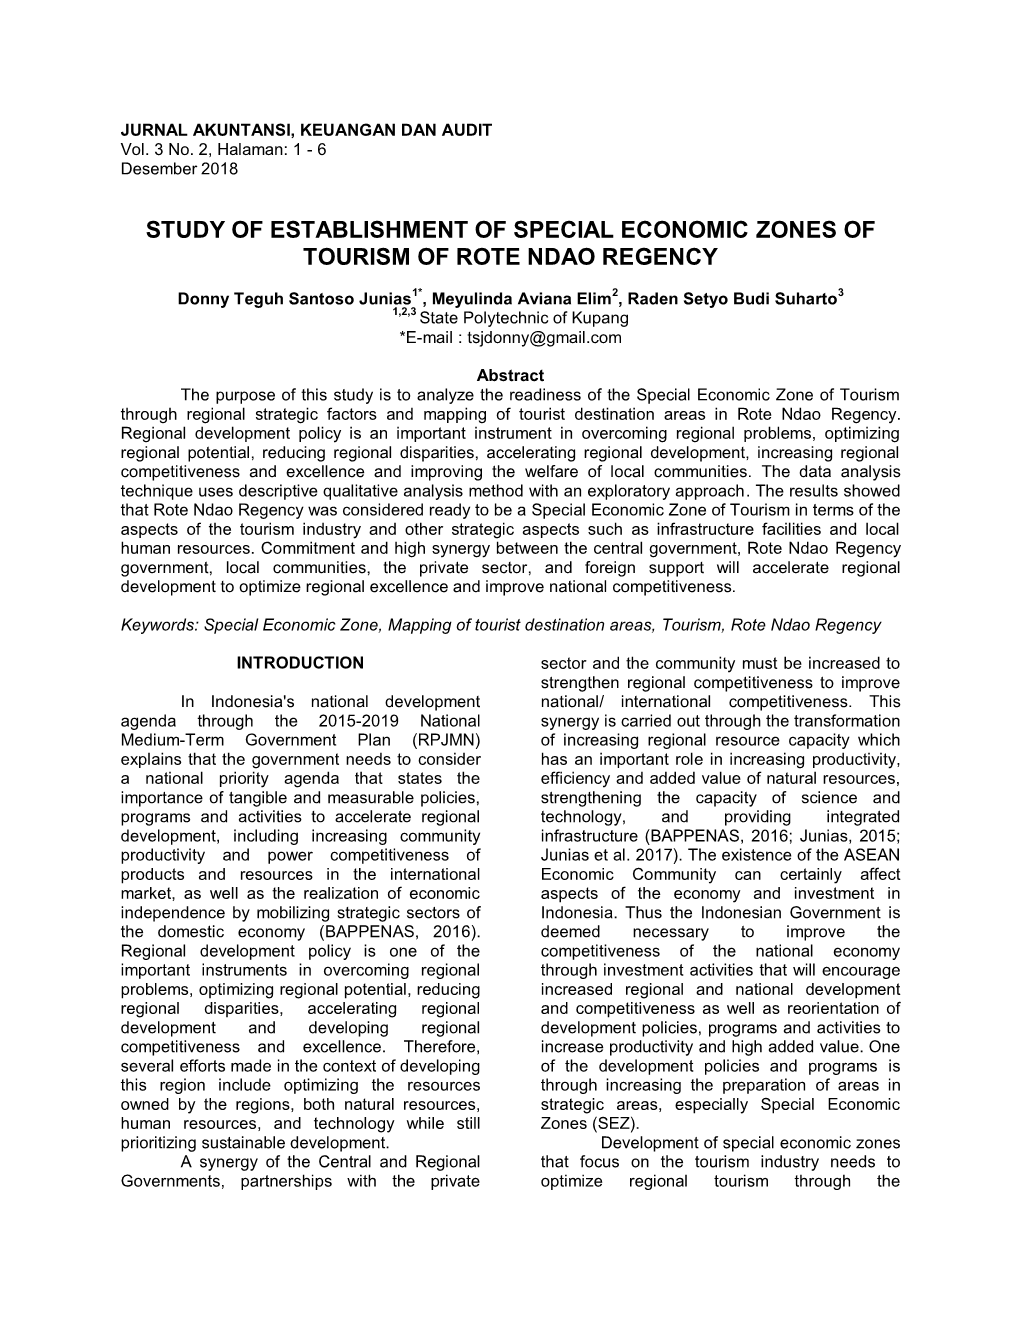 Study of Establishment of Special Economic Zones of Tourism of Rote Ndao Regency